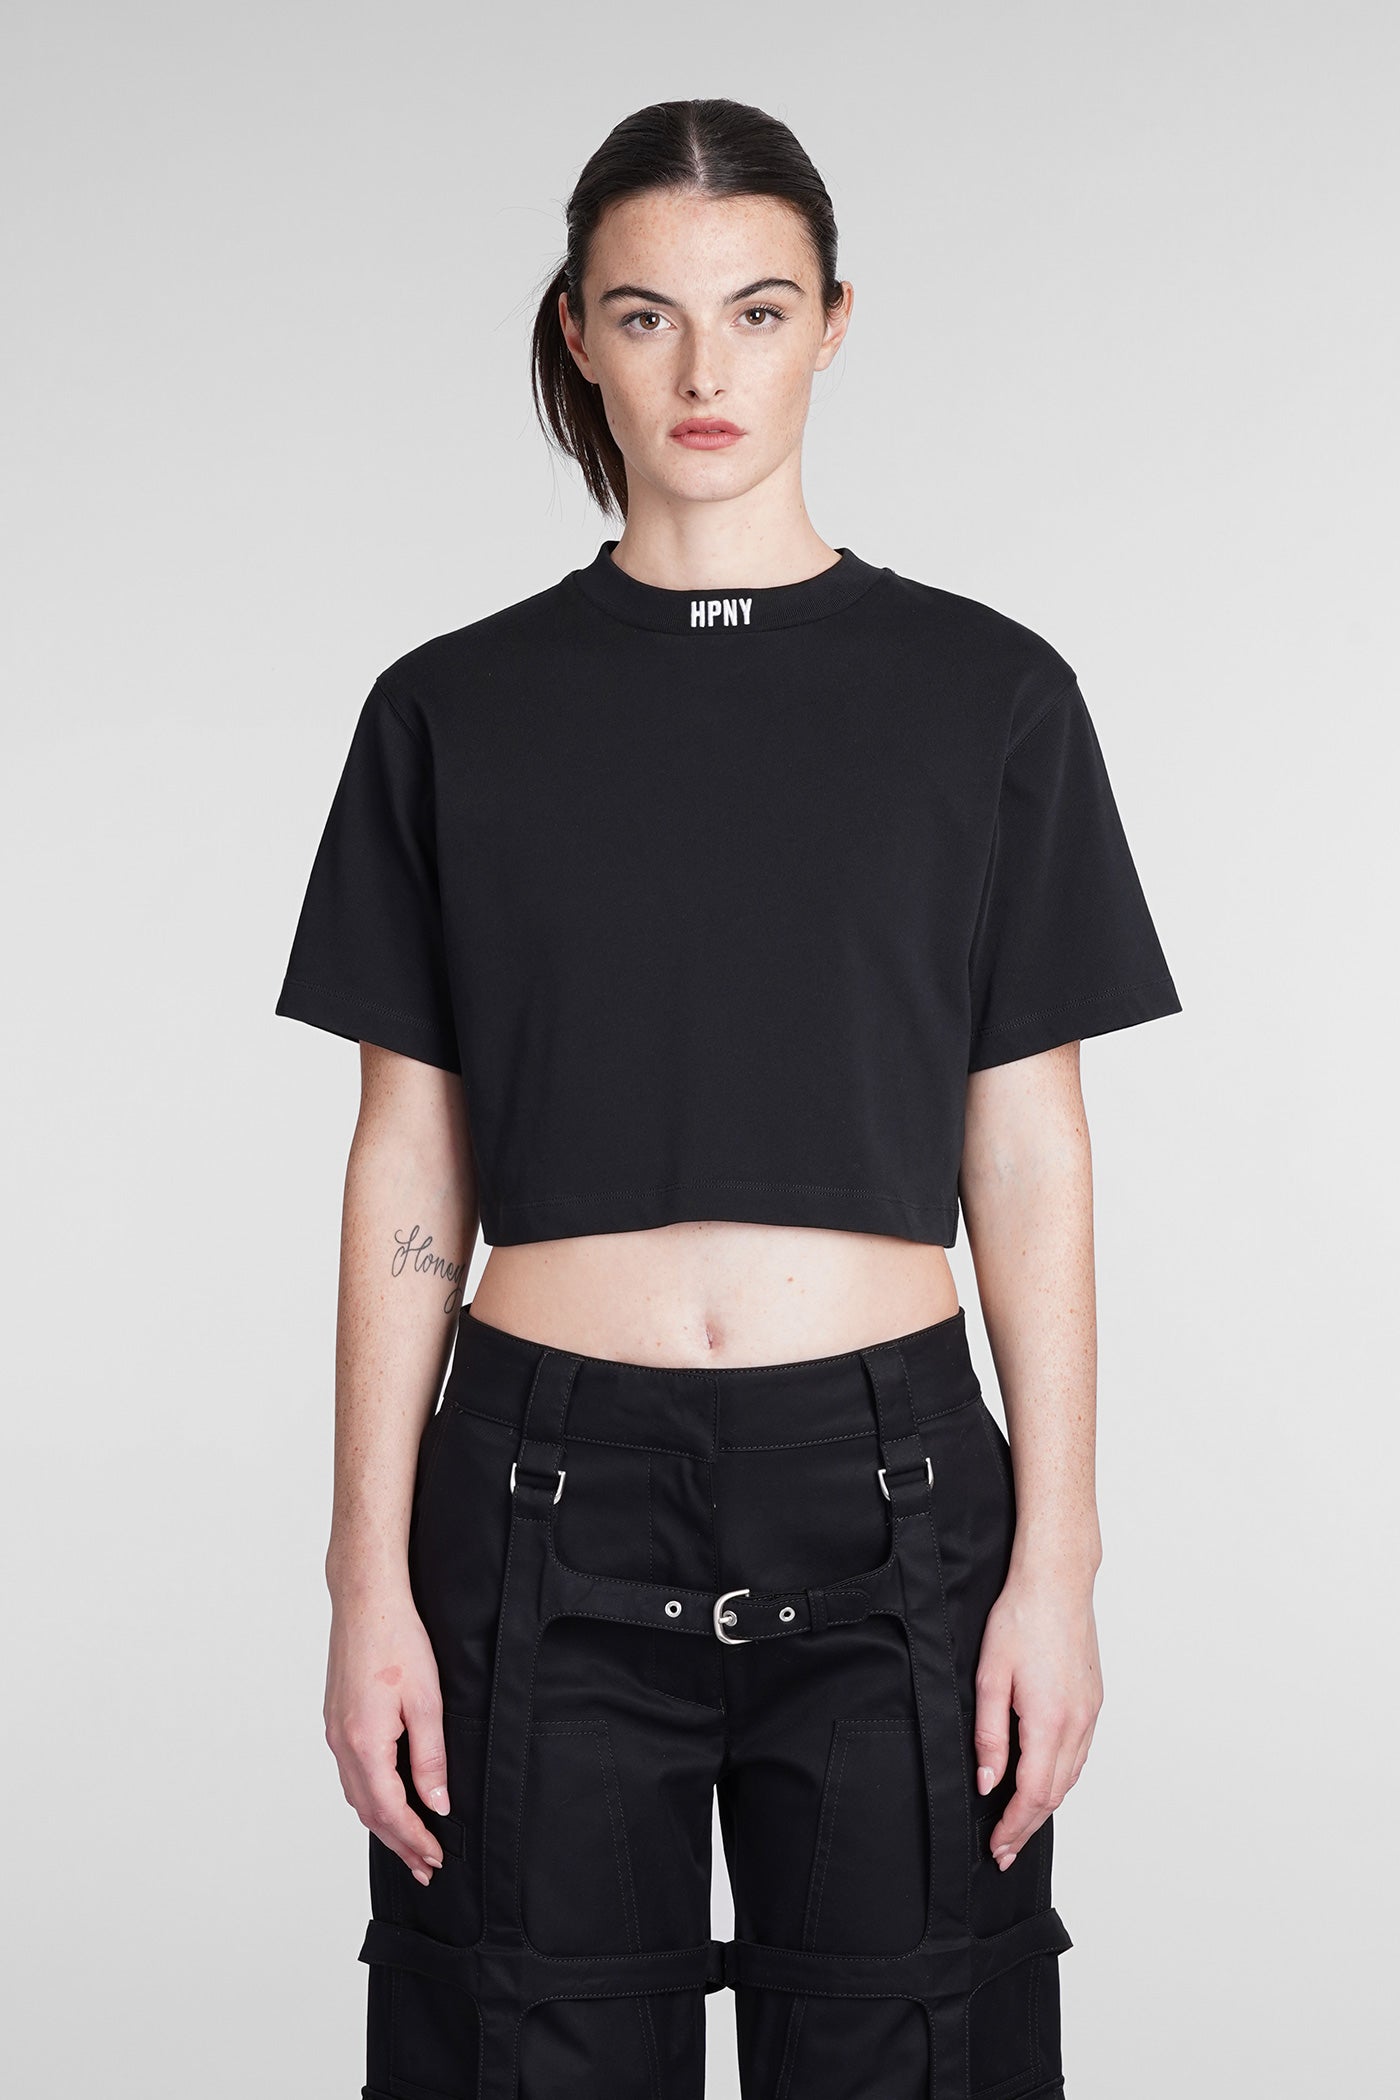 T-Shirt in black cotton